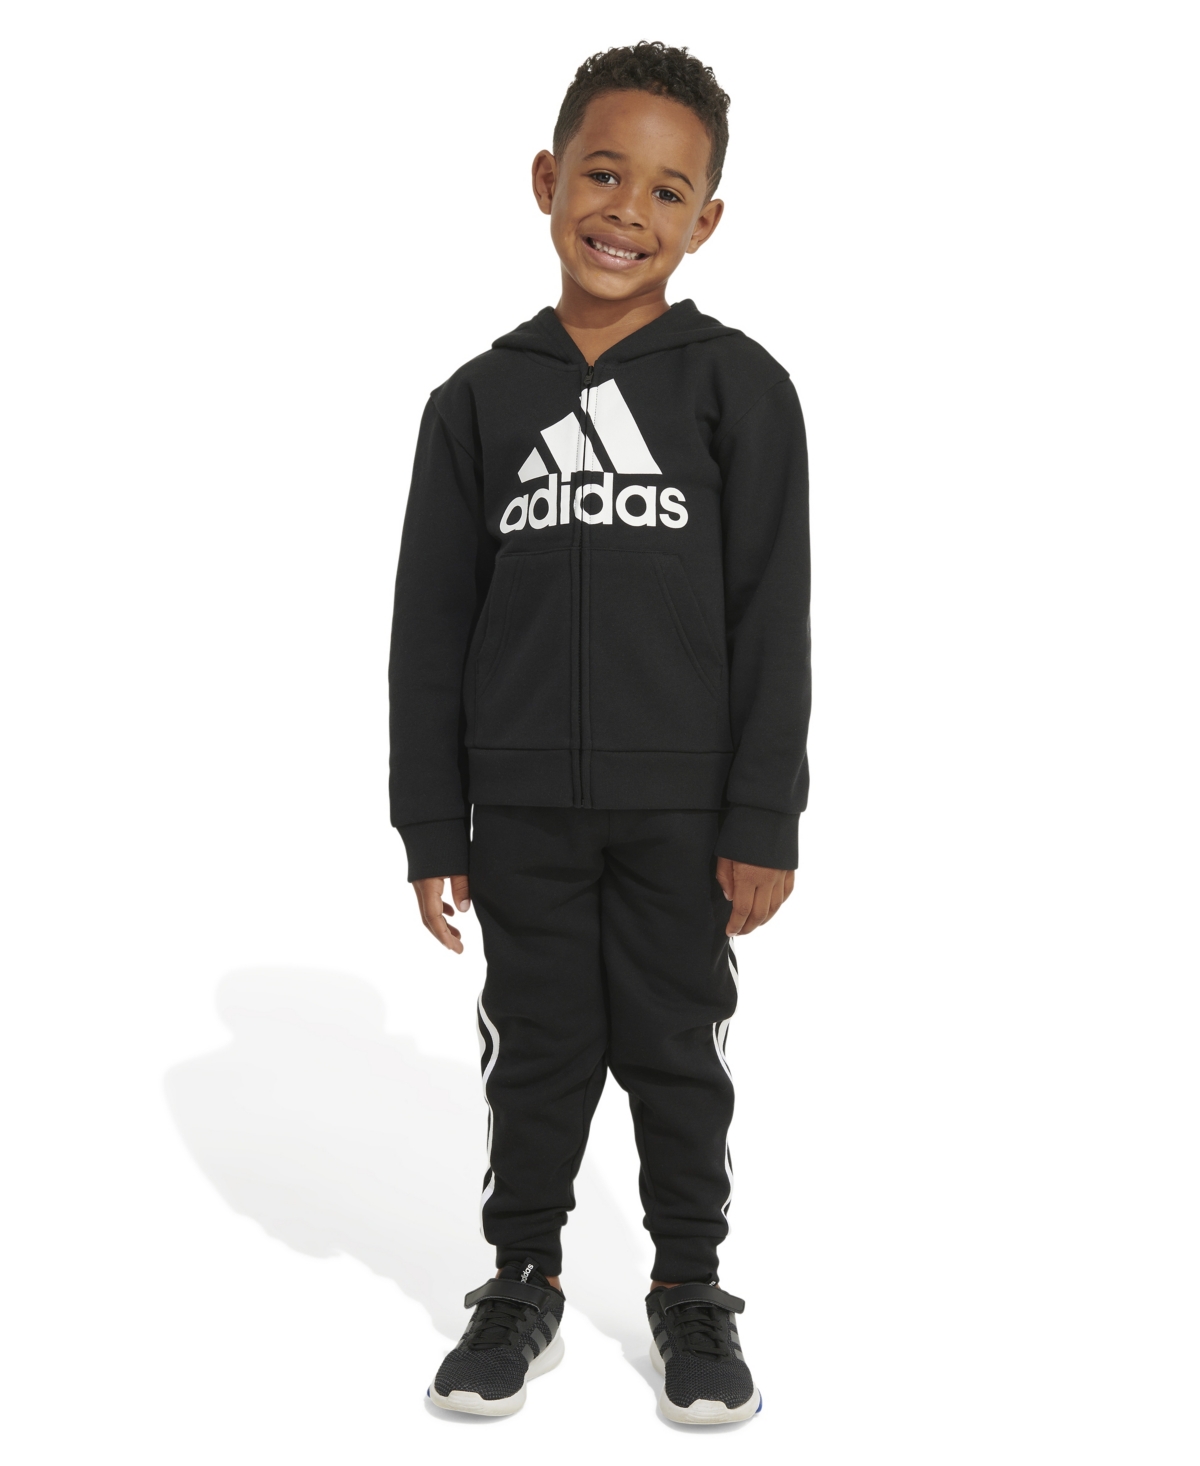 Adidas Originals Kids' Toddler Boys Fleece Hoodie Set, 2 Piece In Black